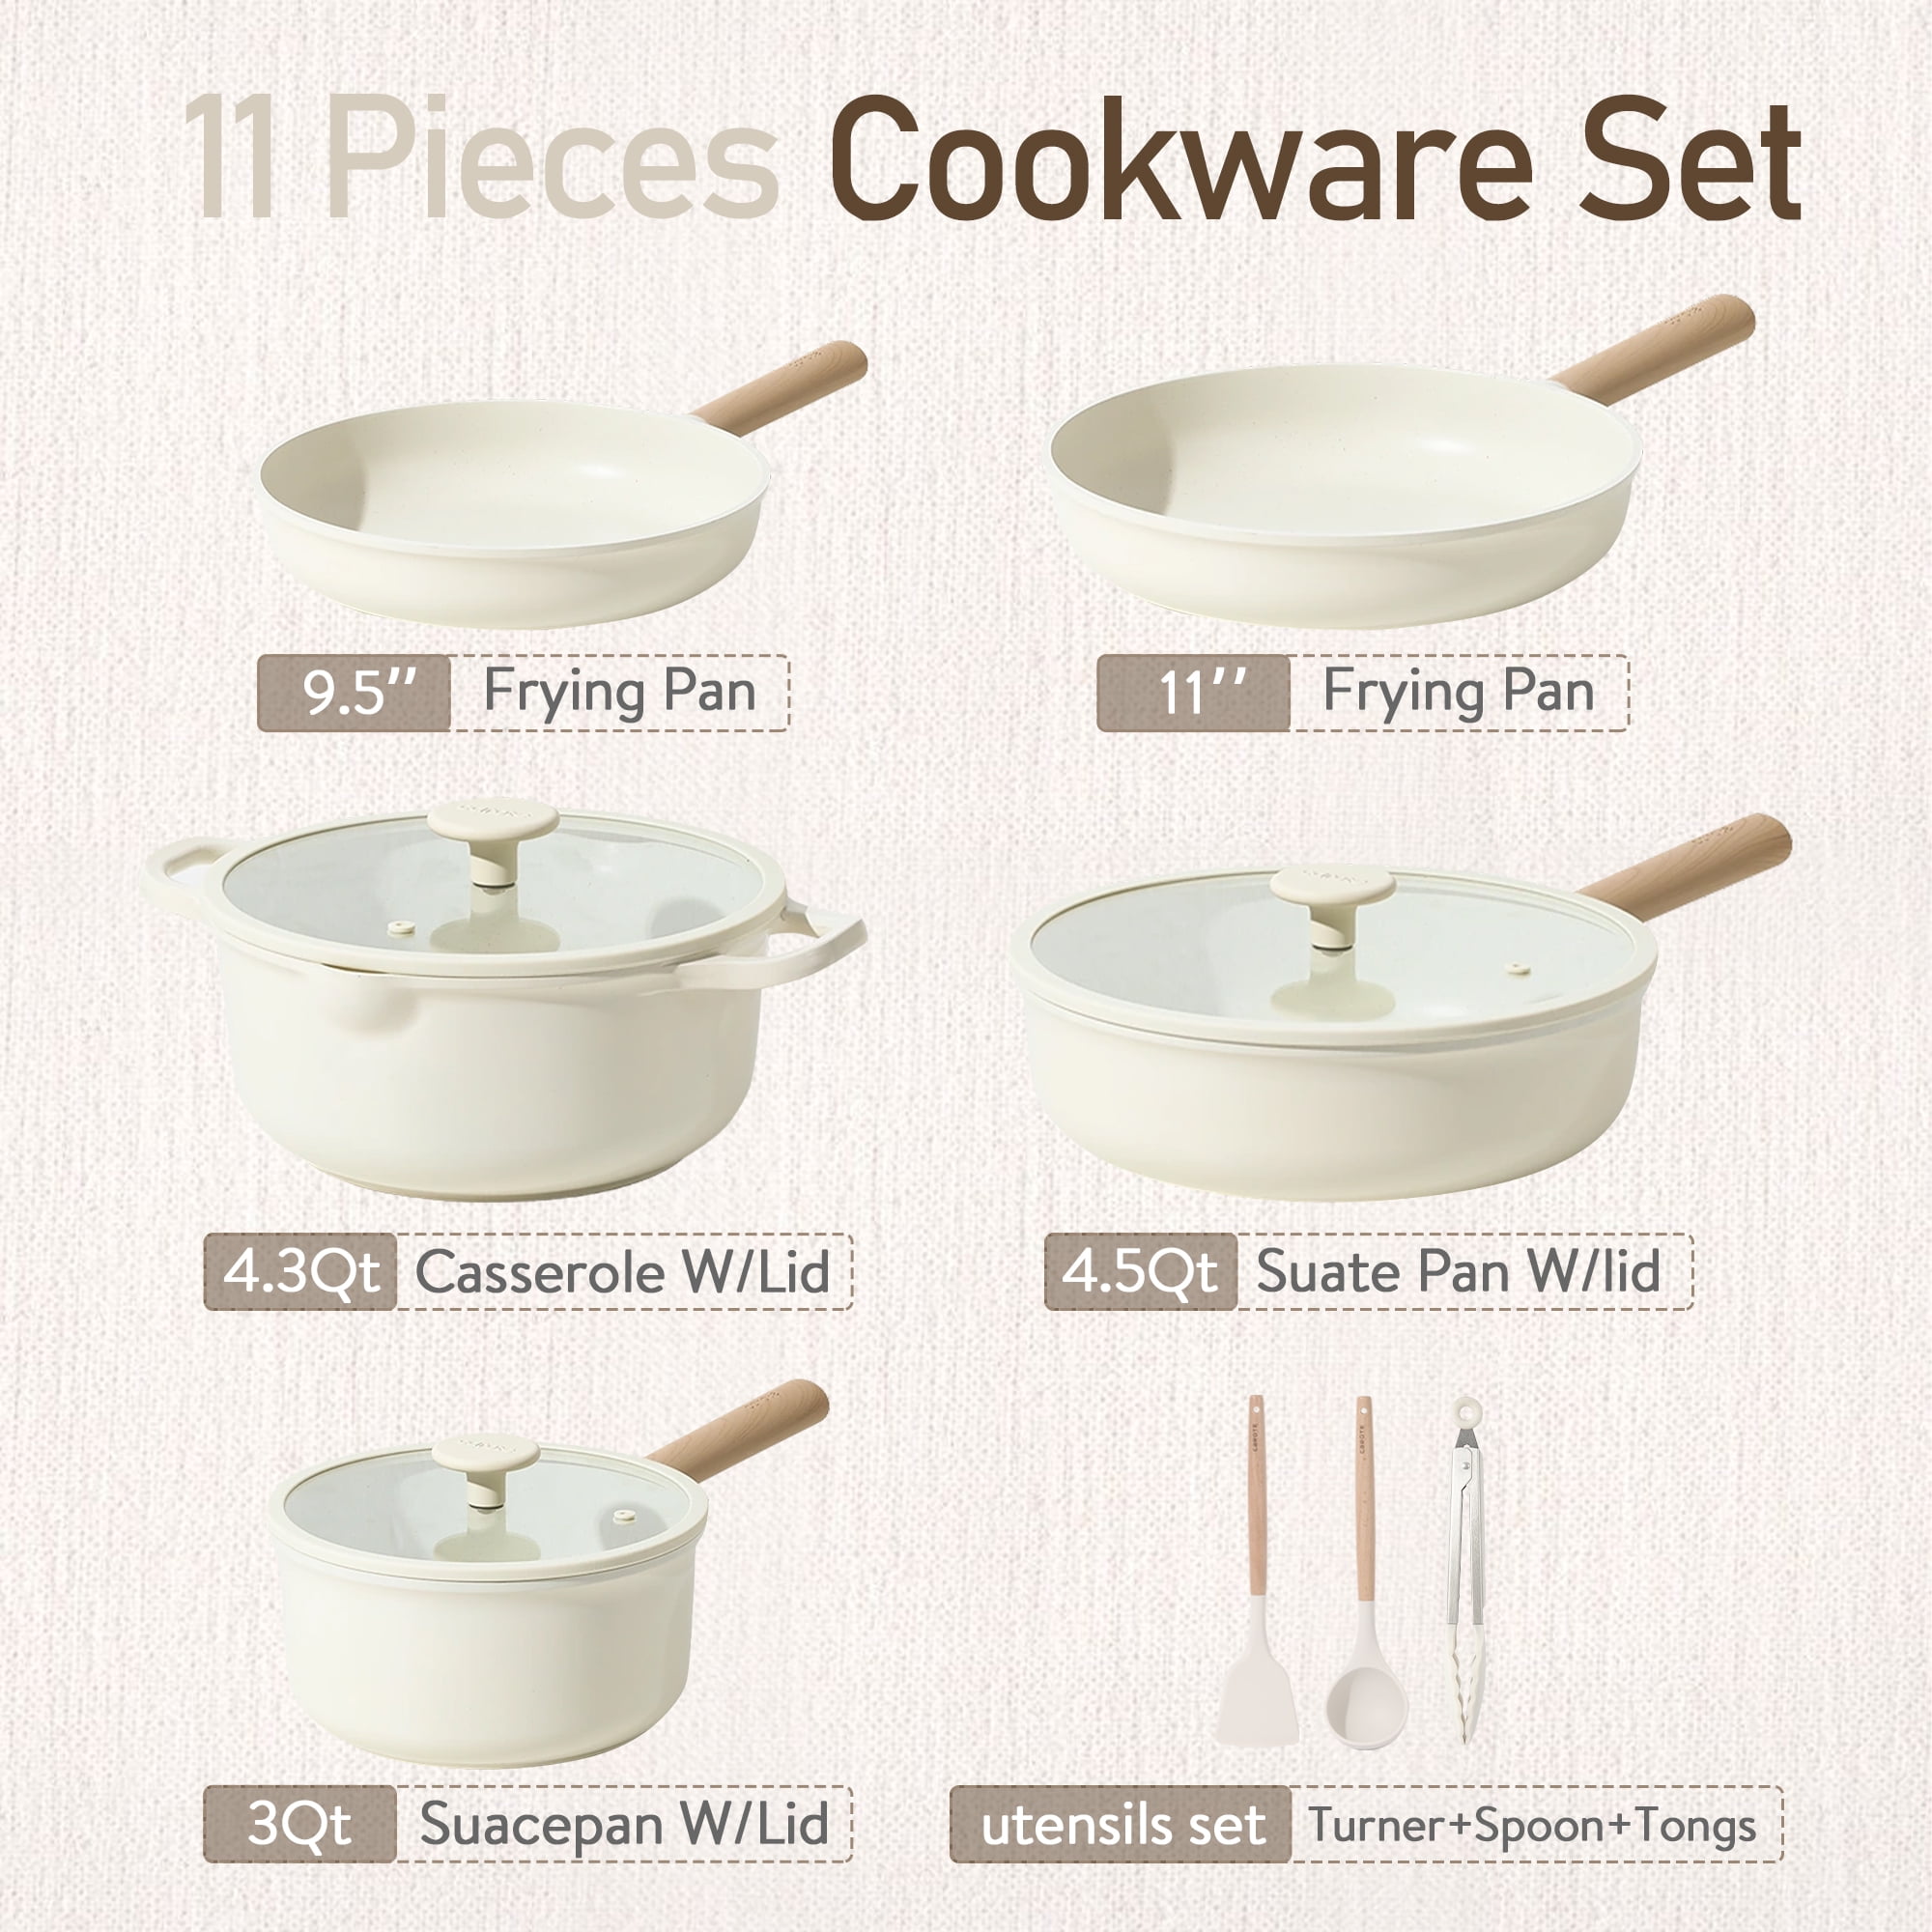 For CAROTE 11pcs Pots and Pans Set, Nonstick Cookware Set